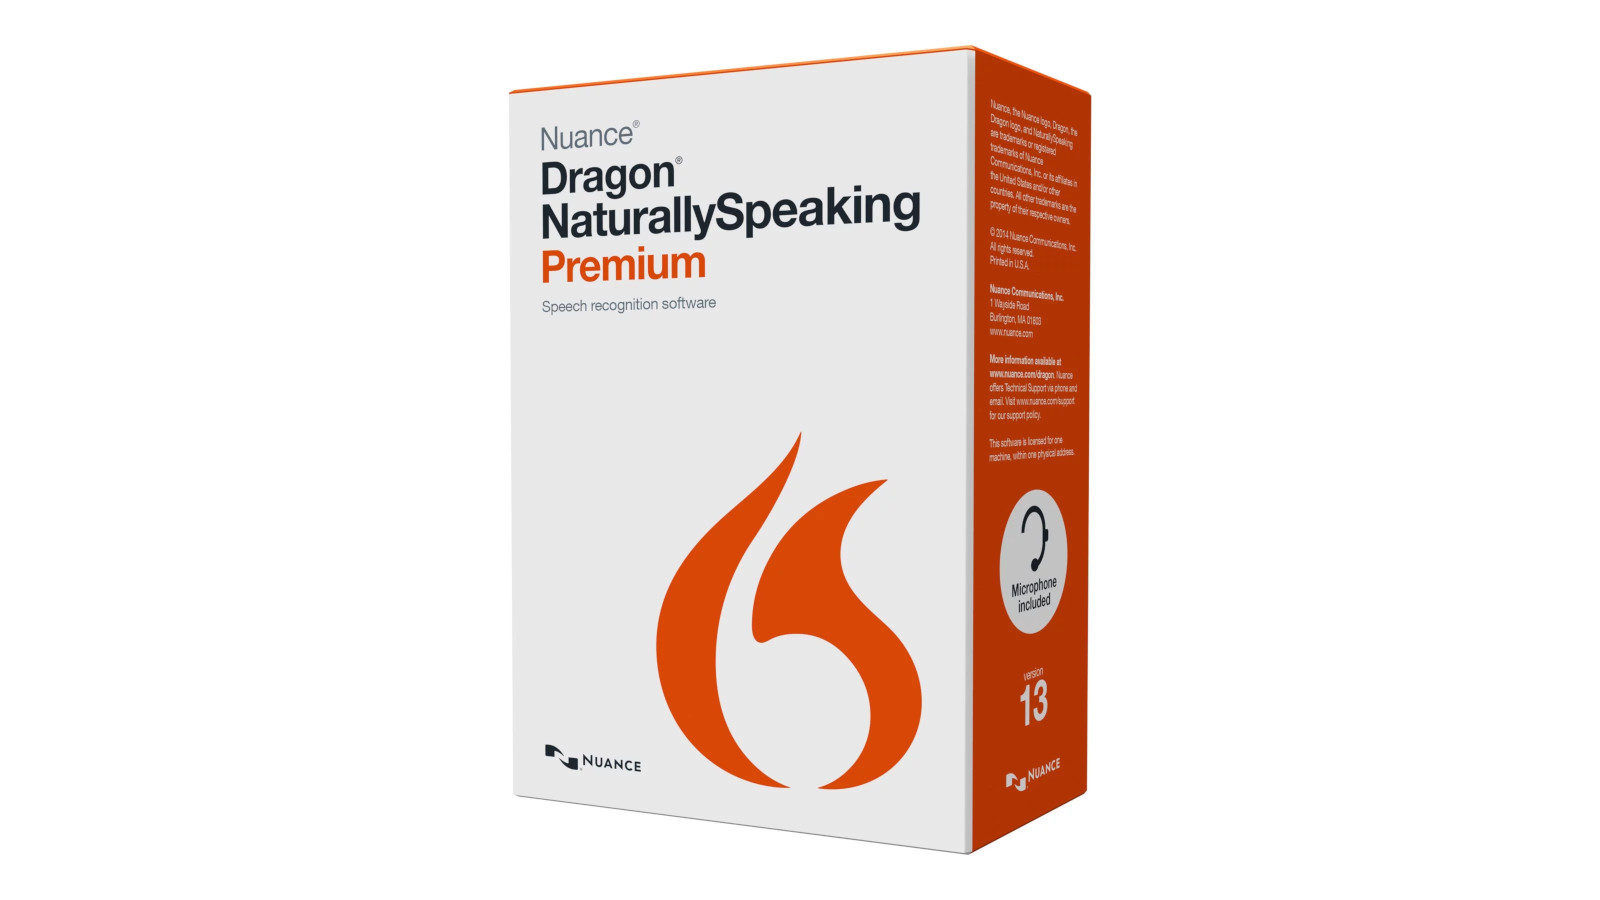 (13.73$) Nuance Dragon NaturallySpeaking Premium 13 Key (Lifetime / 1 PC)